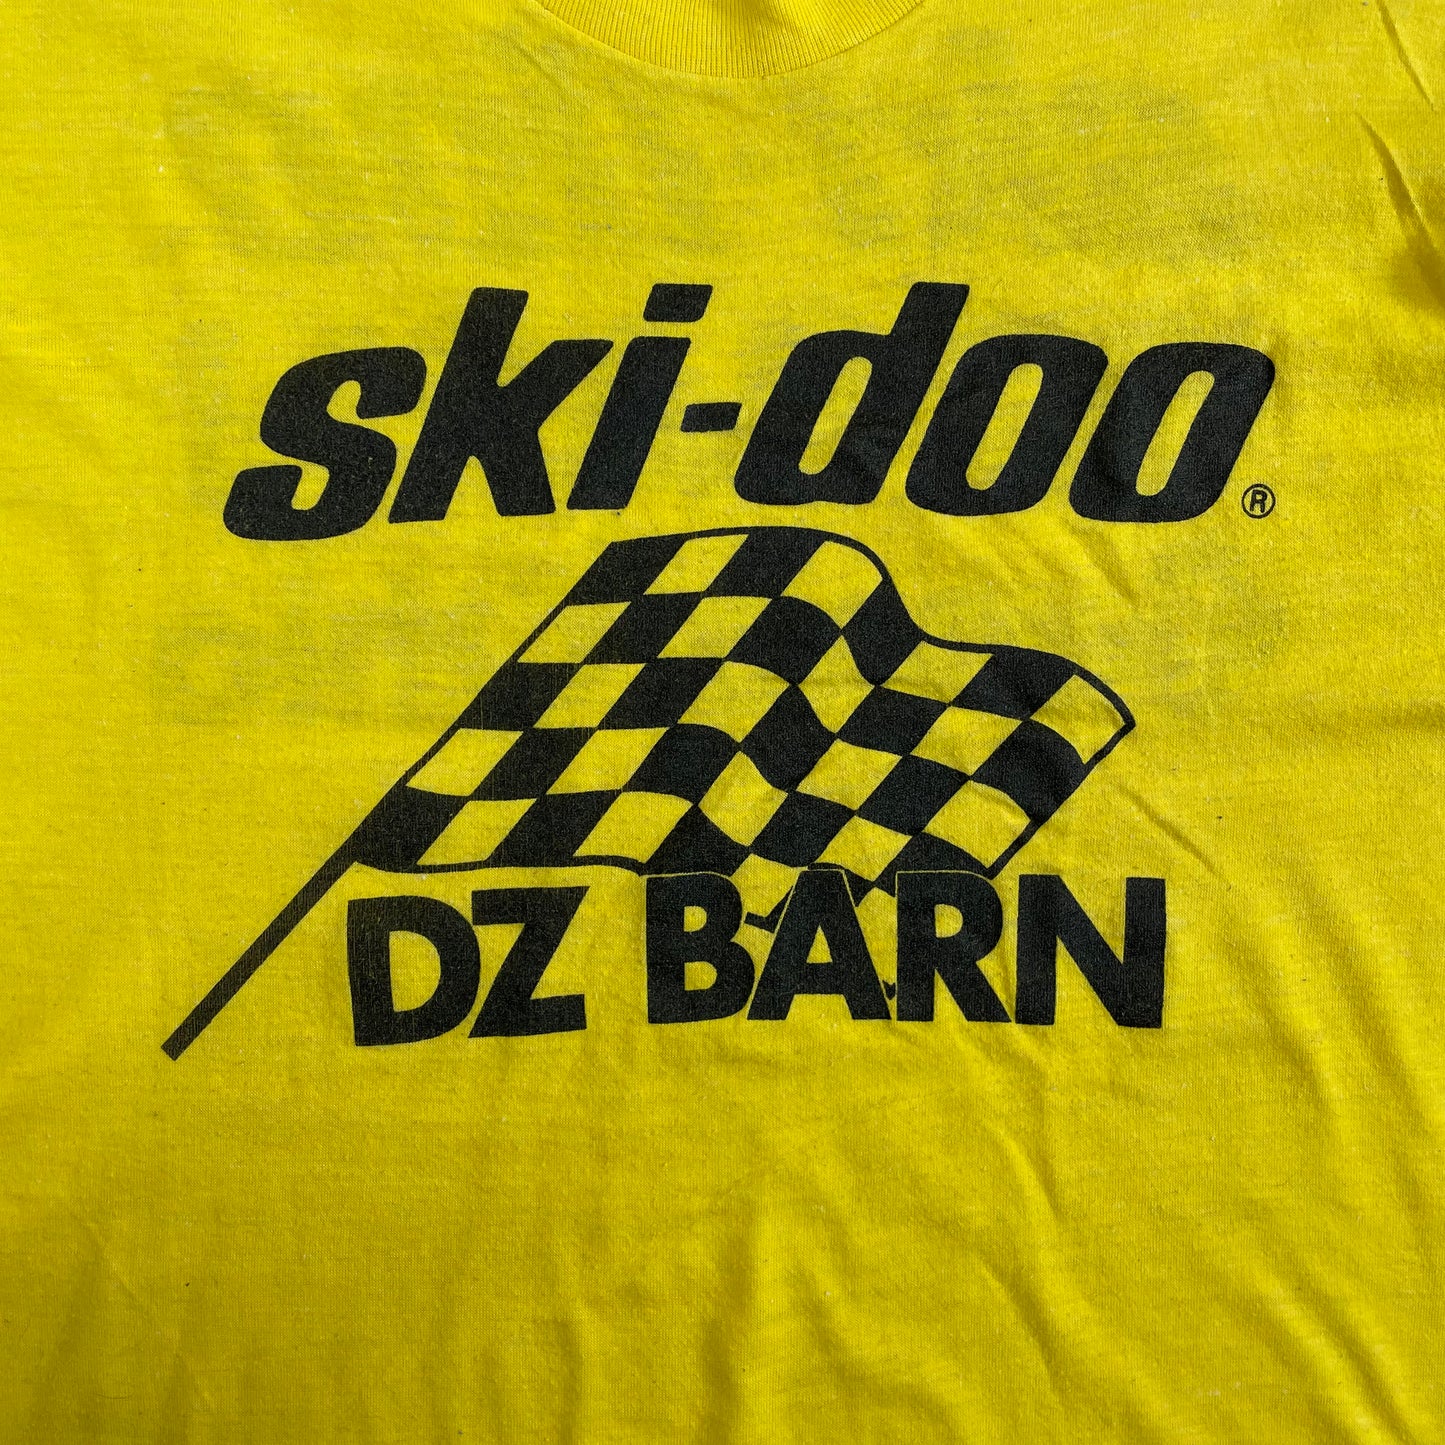 Vintage Single Stitch T-Shirt 80's Screenstars “Ski-Doo DZ Barn Genoa, Ohio” Made in USA